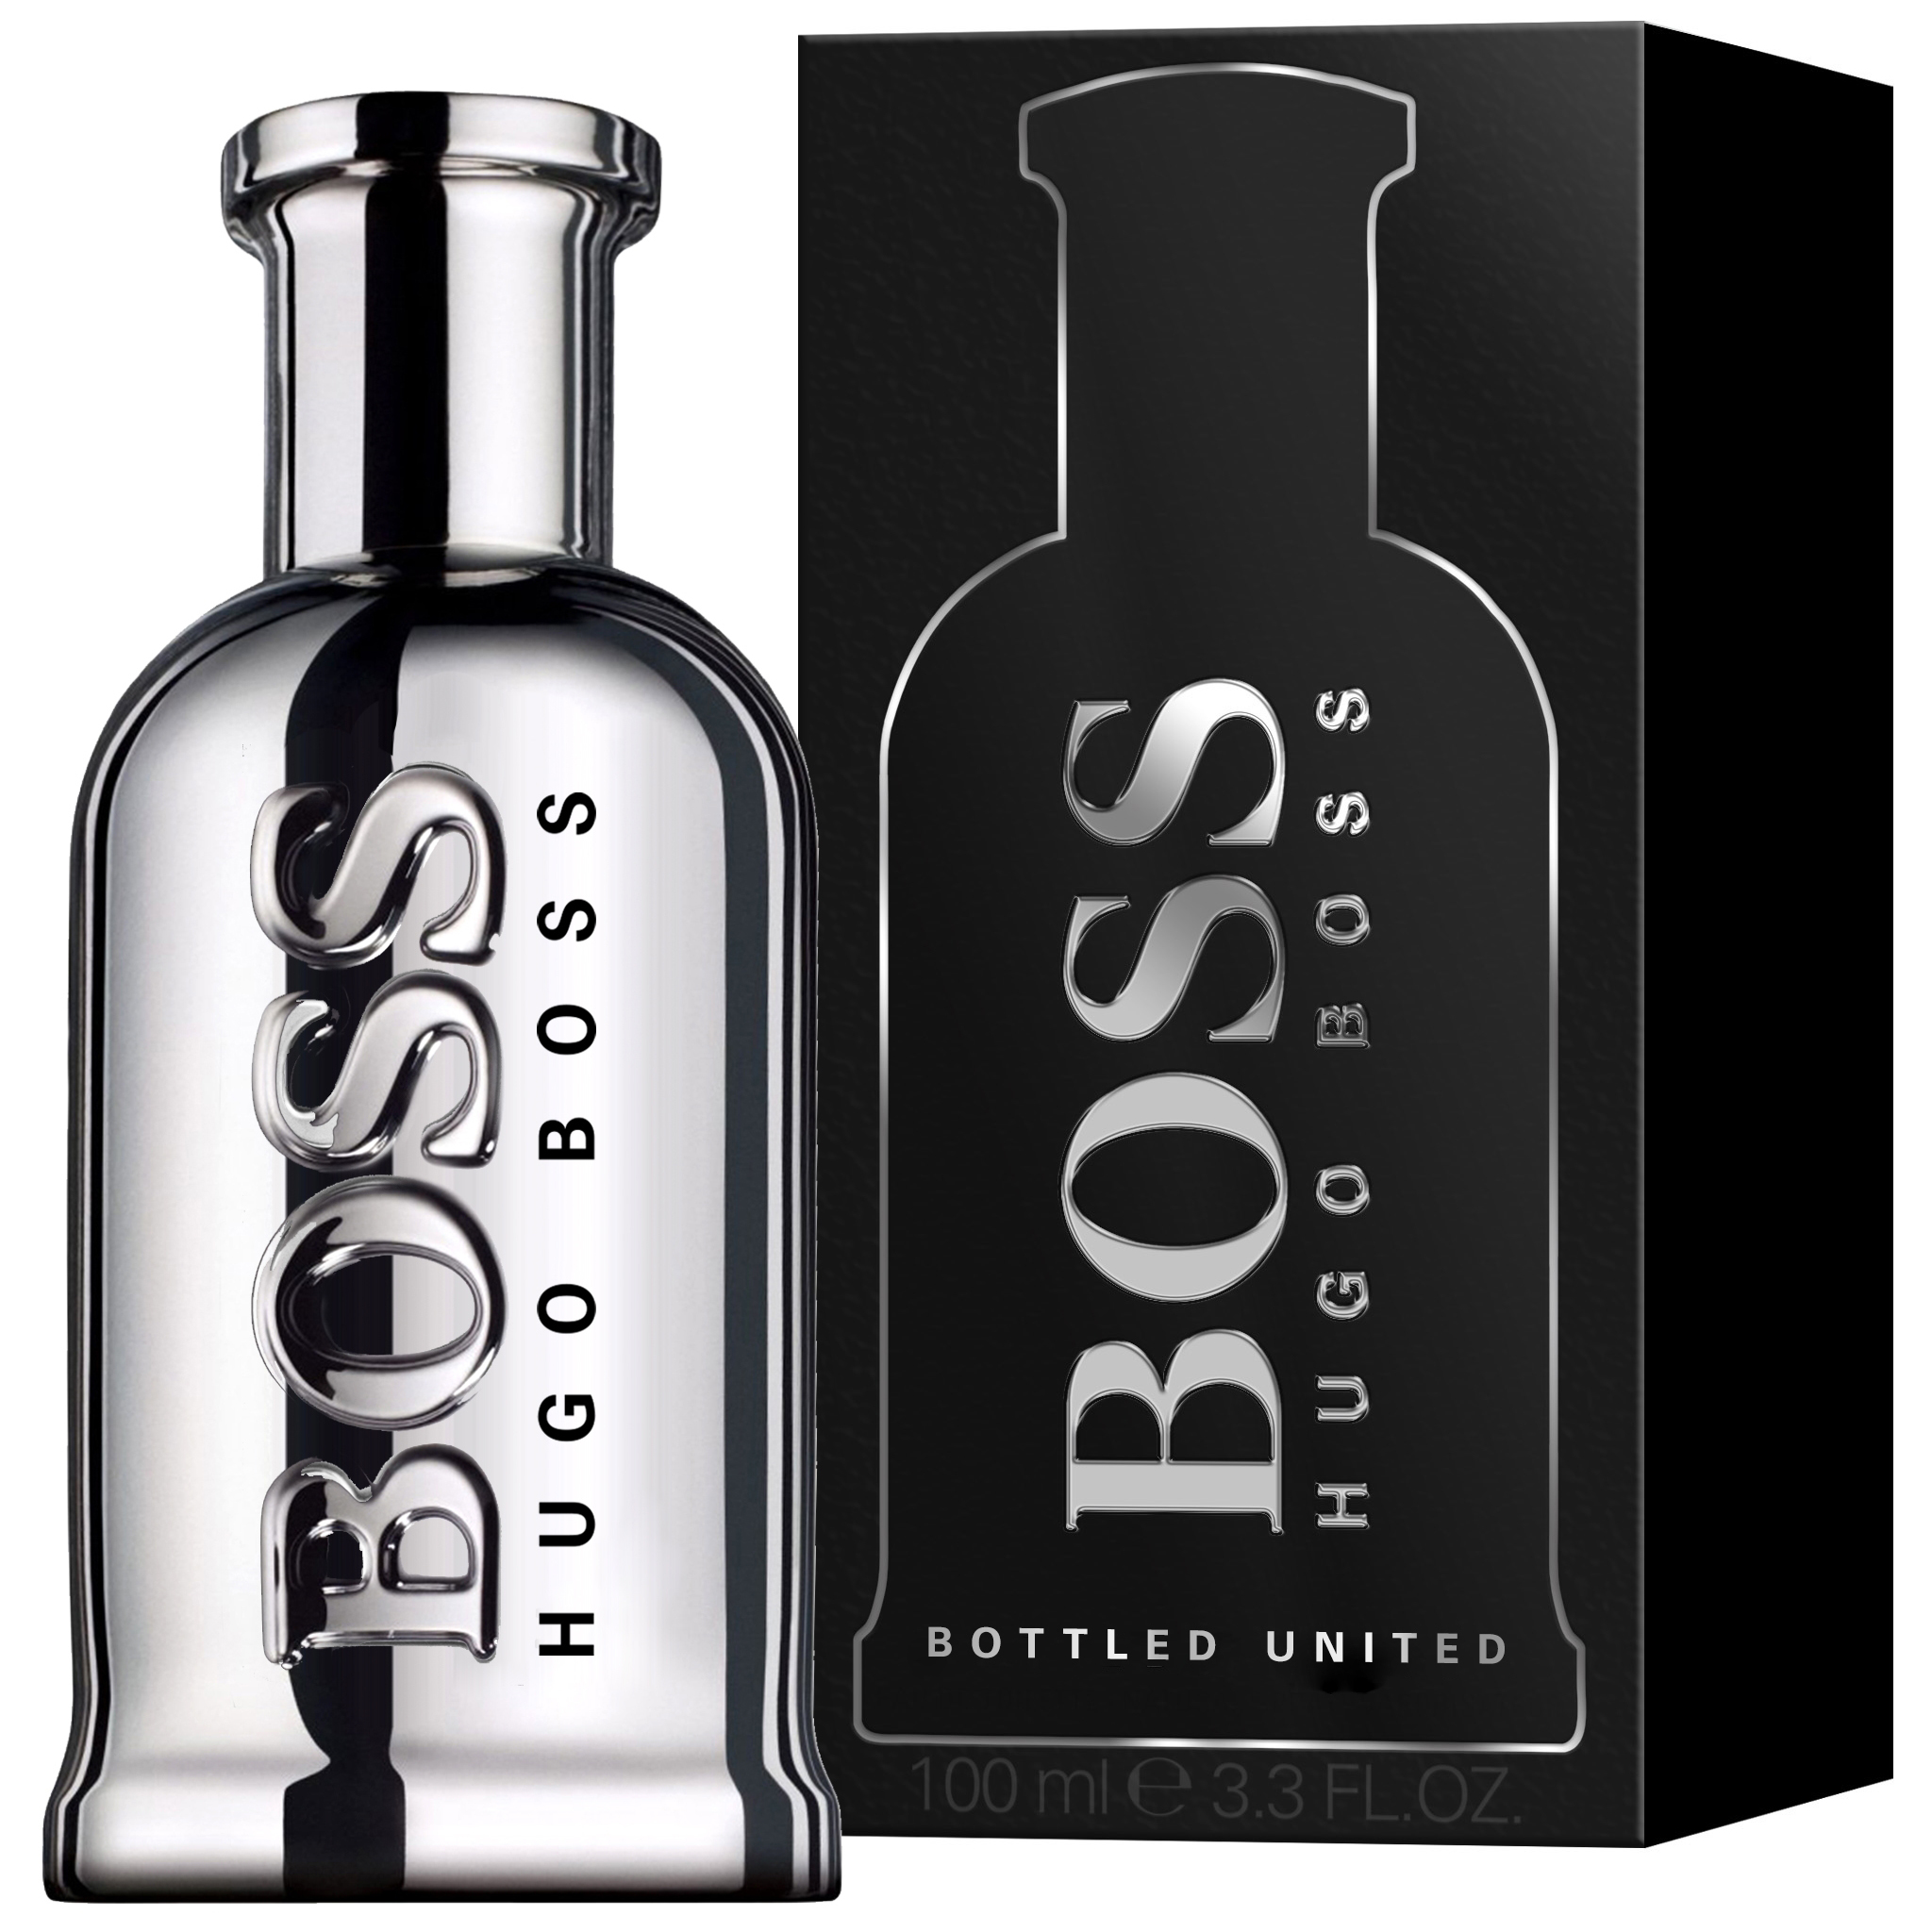 Хуго босс ботлед. Hugo Boss Bottled. Духи Hugo Boss Bottled мужские. Босс Ботлед Юнайтед Хуго босс. Хьюго босс Хьюго.